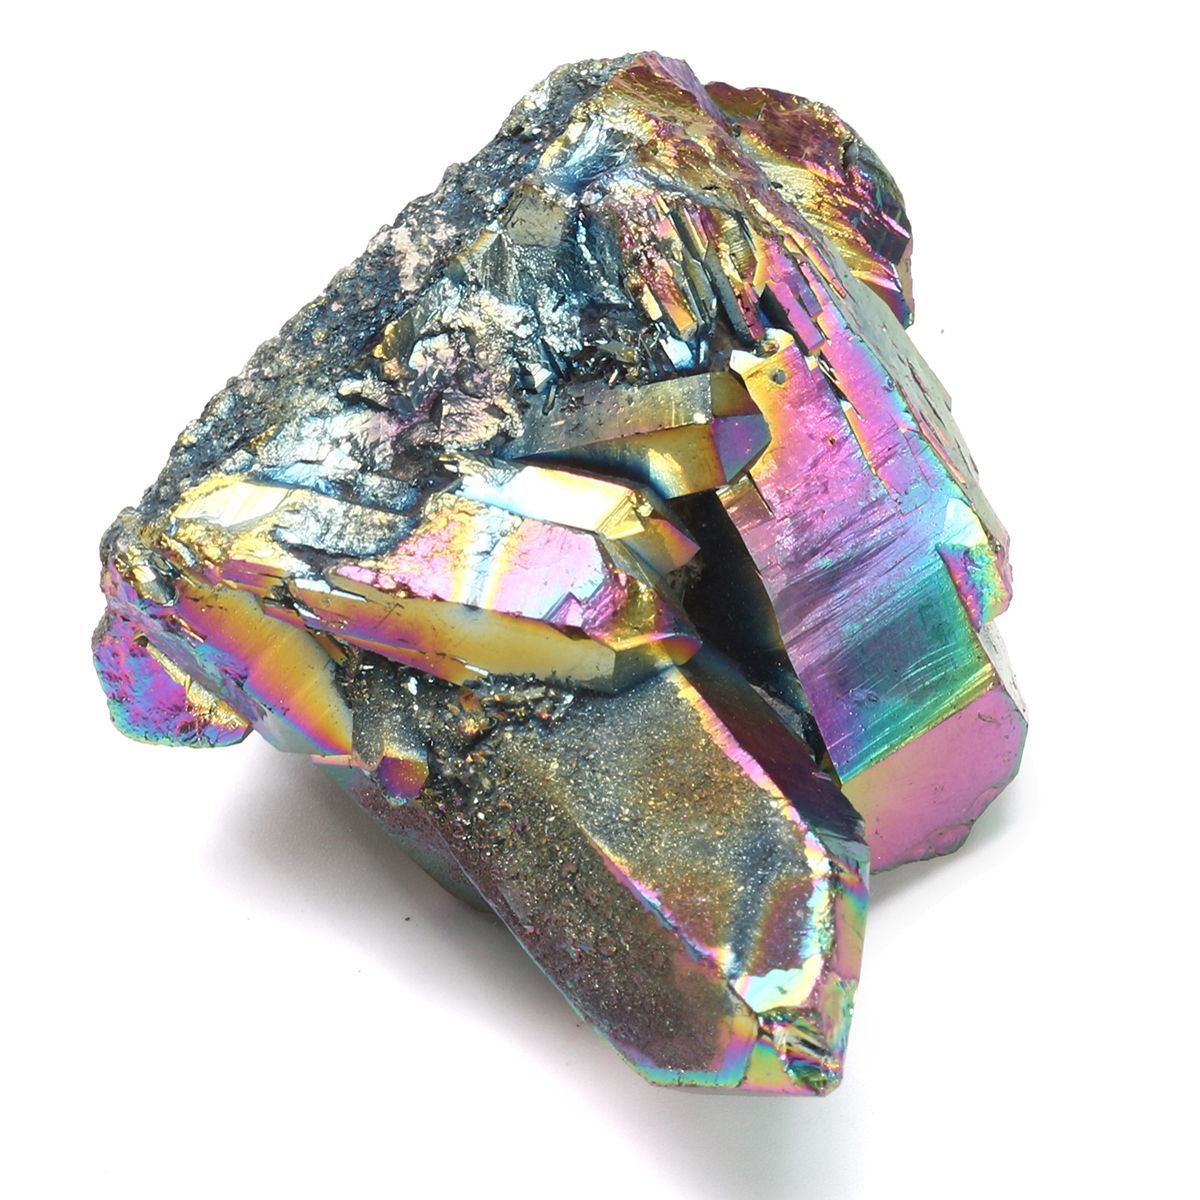 Rainbow-Titanium-Coated-Drusy-Quartz-Crystals-Geode-Gemstone-Mineral-Rocks-Decorations-1573667